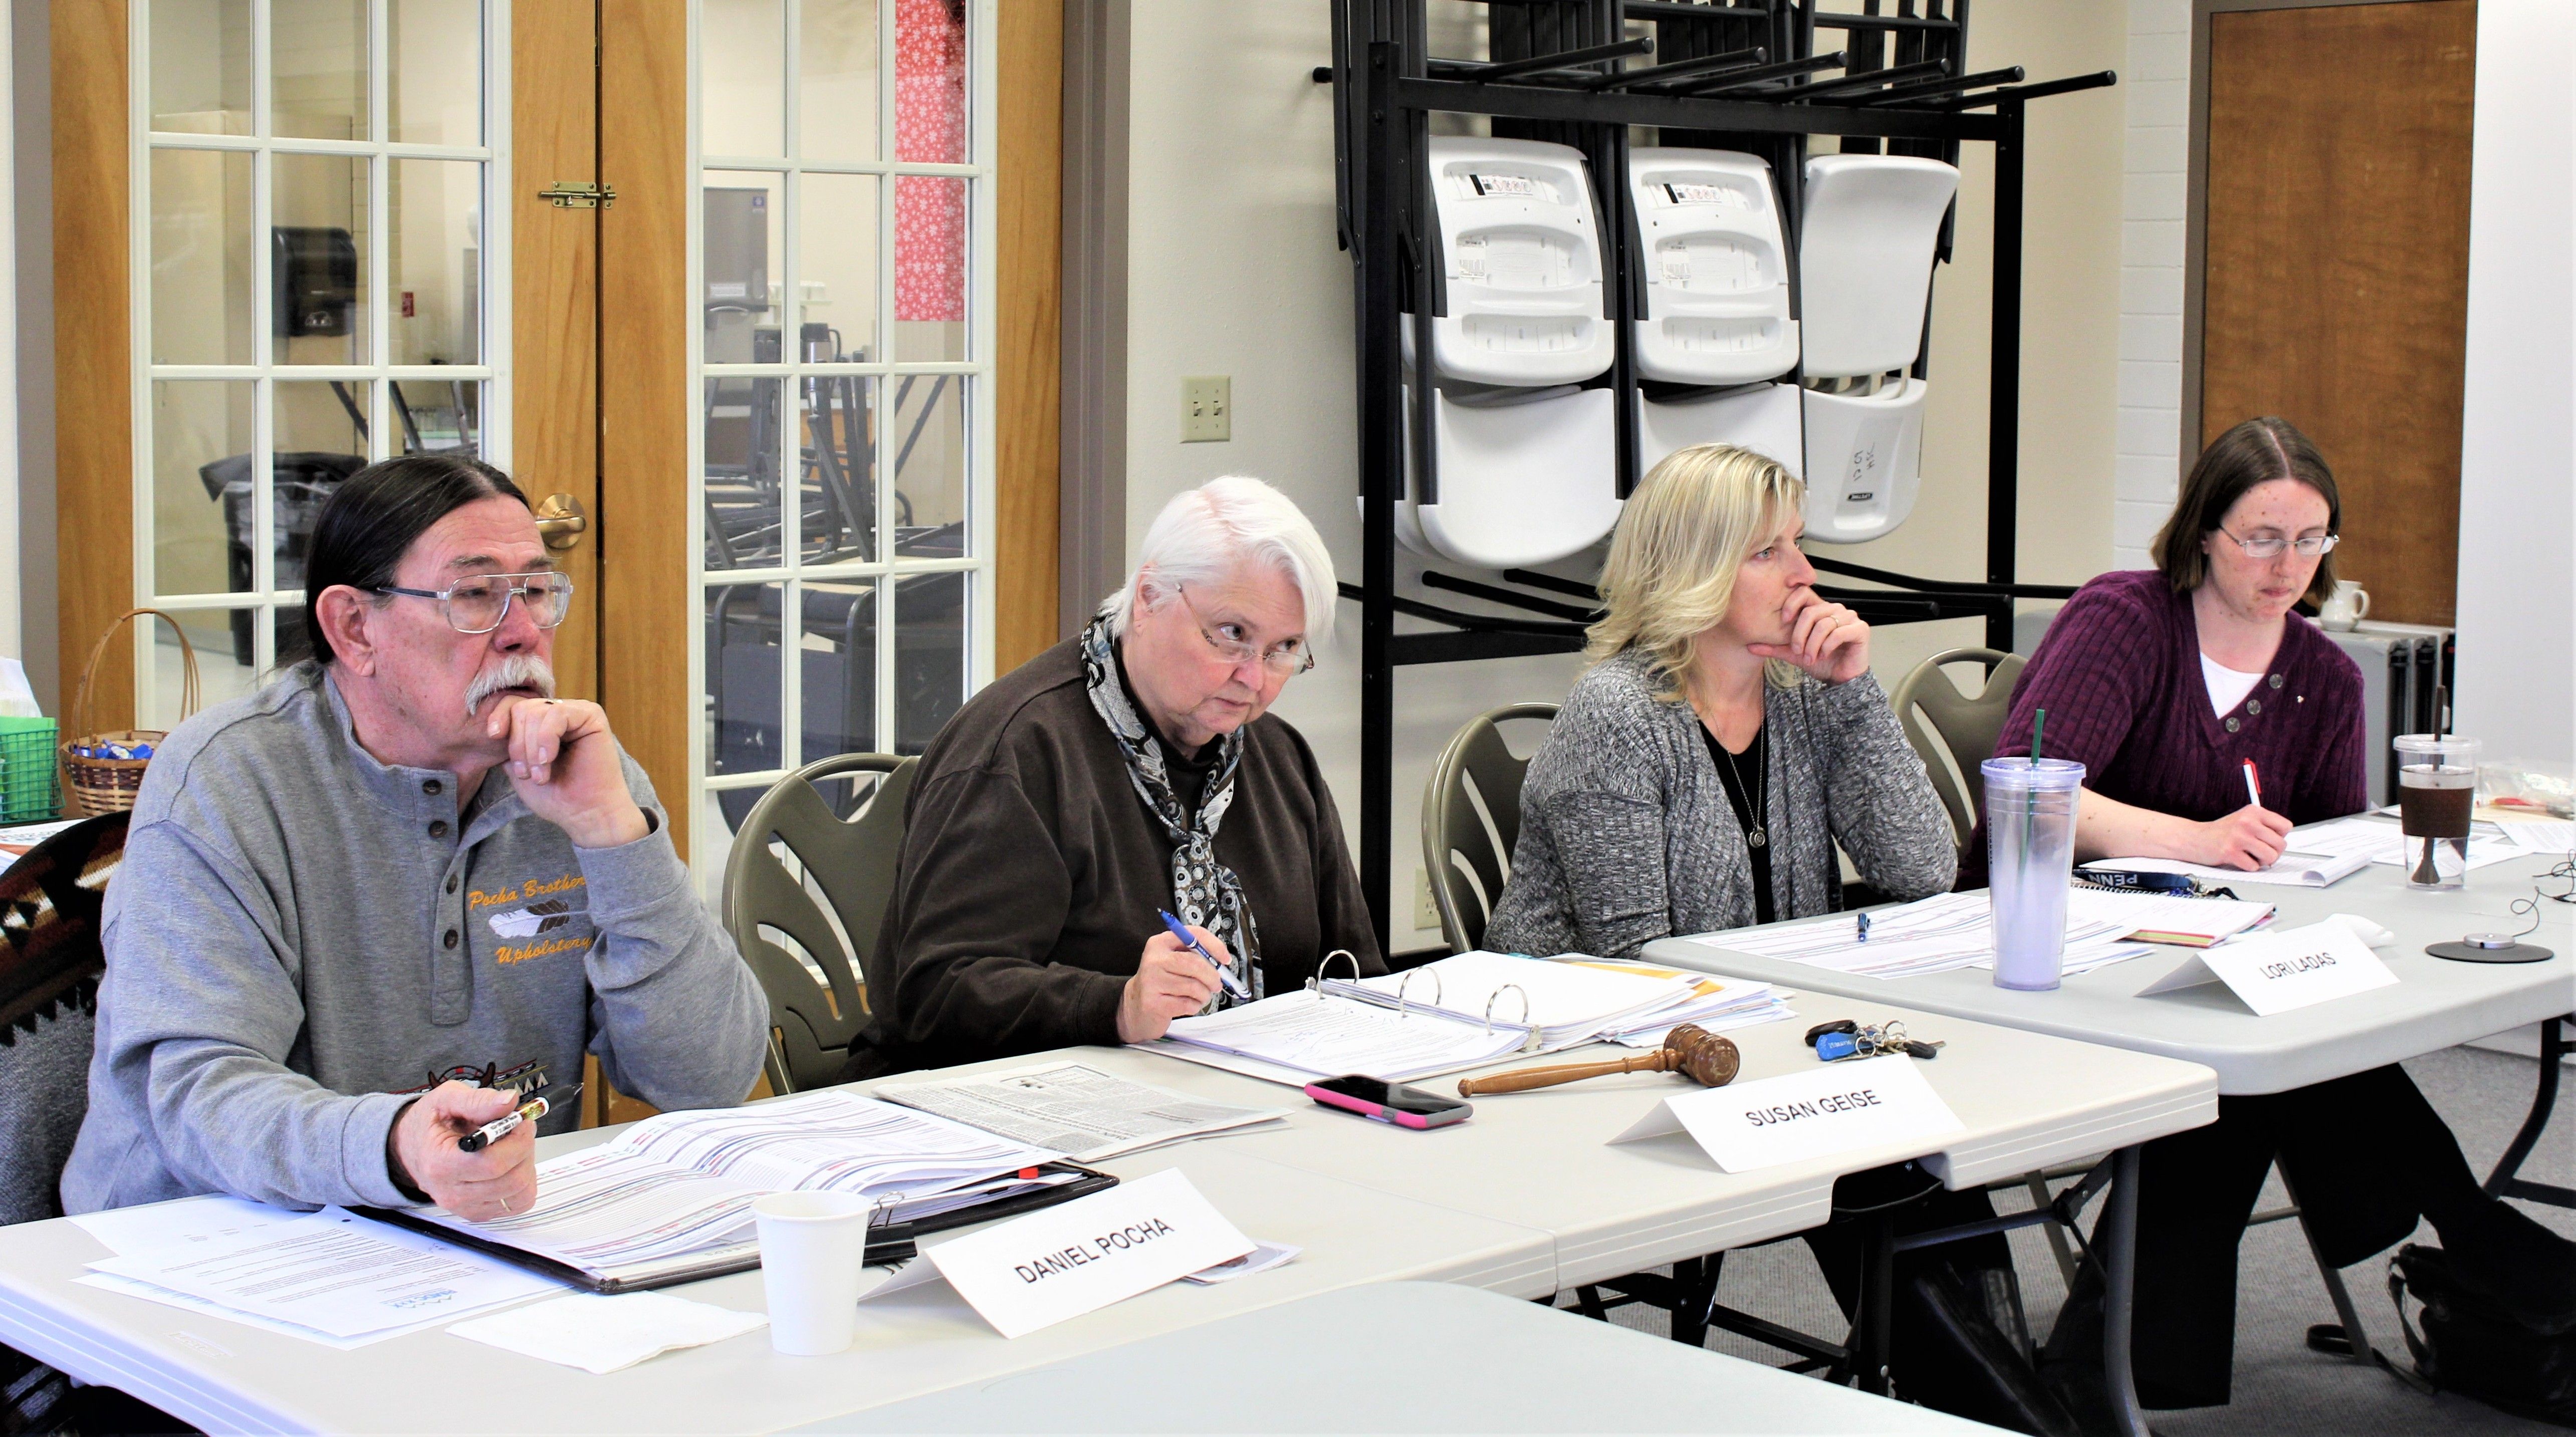 Photo of RMDC Board Meeting in progress. 